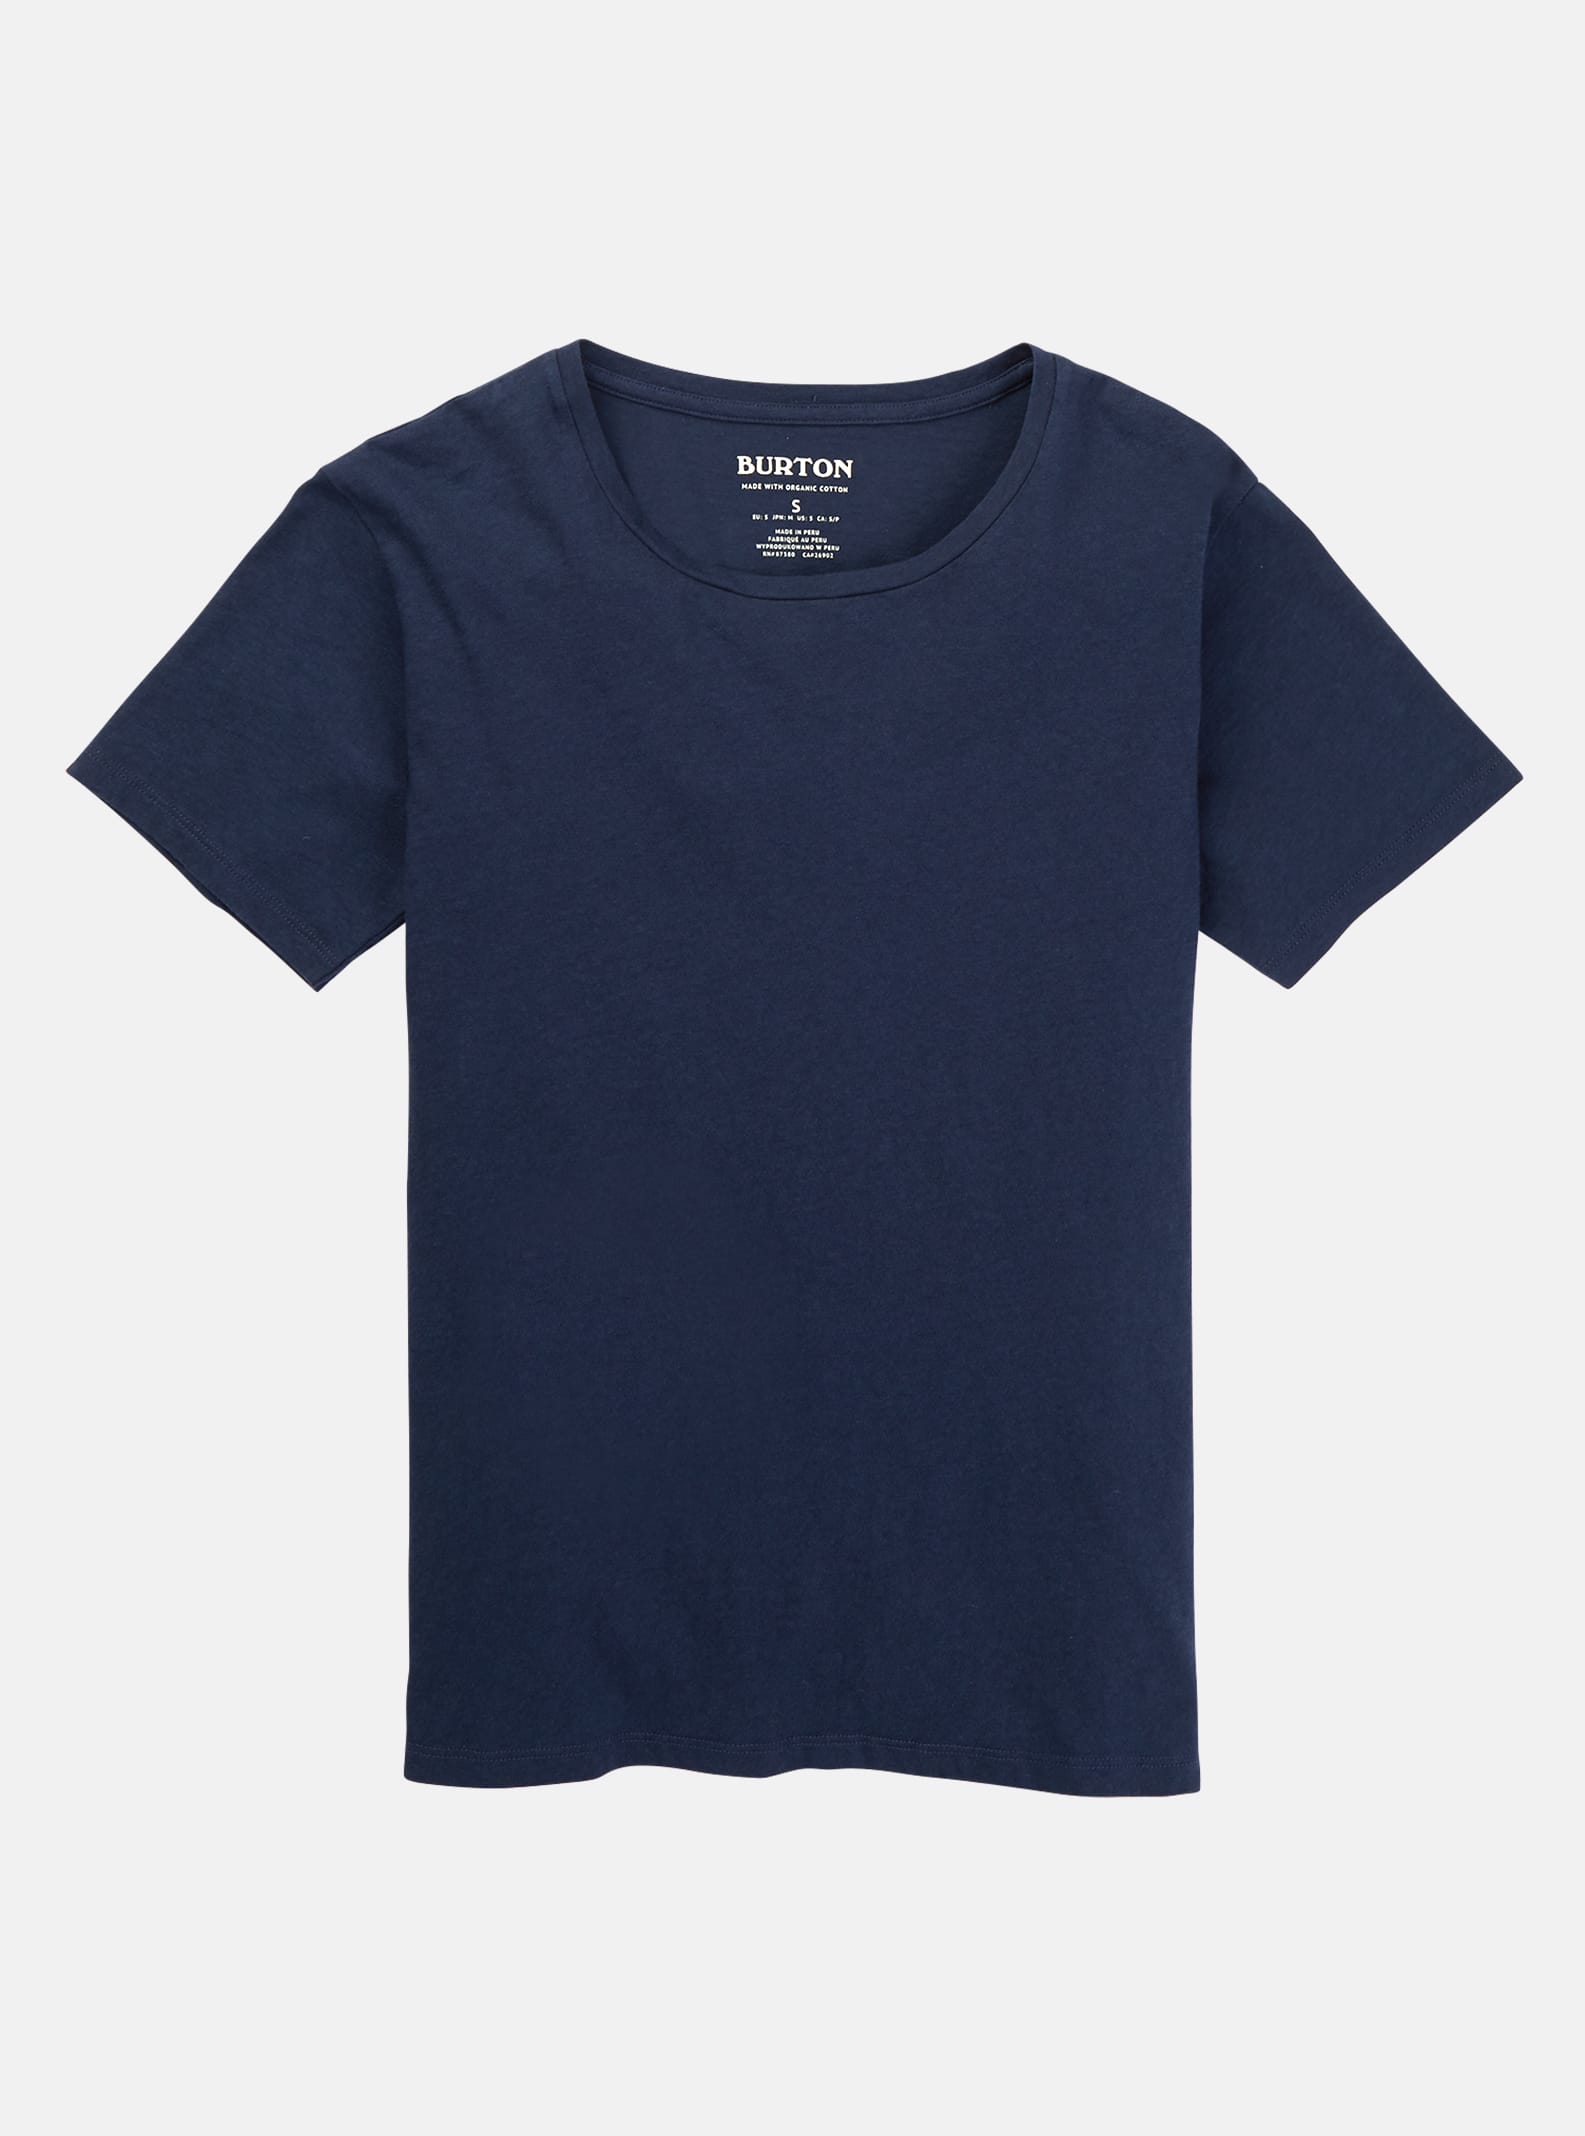 Burton Classic kortärmad t-shirt för damer, Dress Blue, XXS